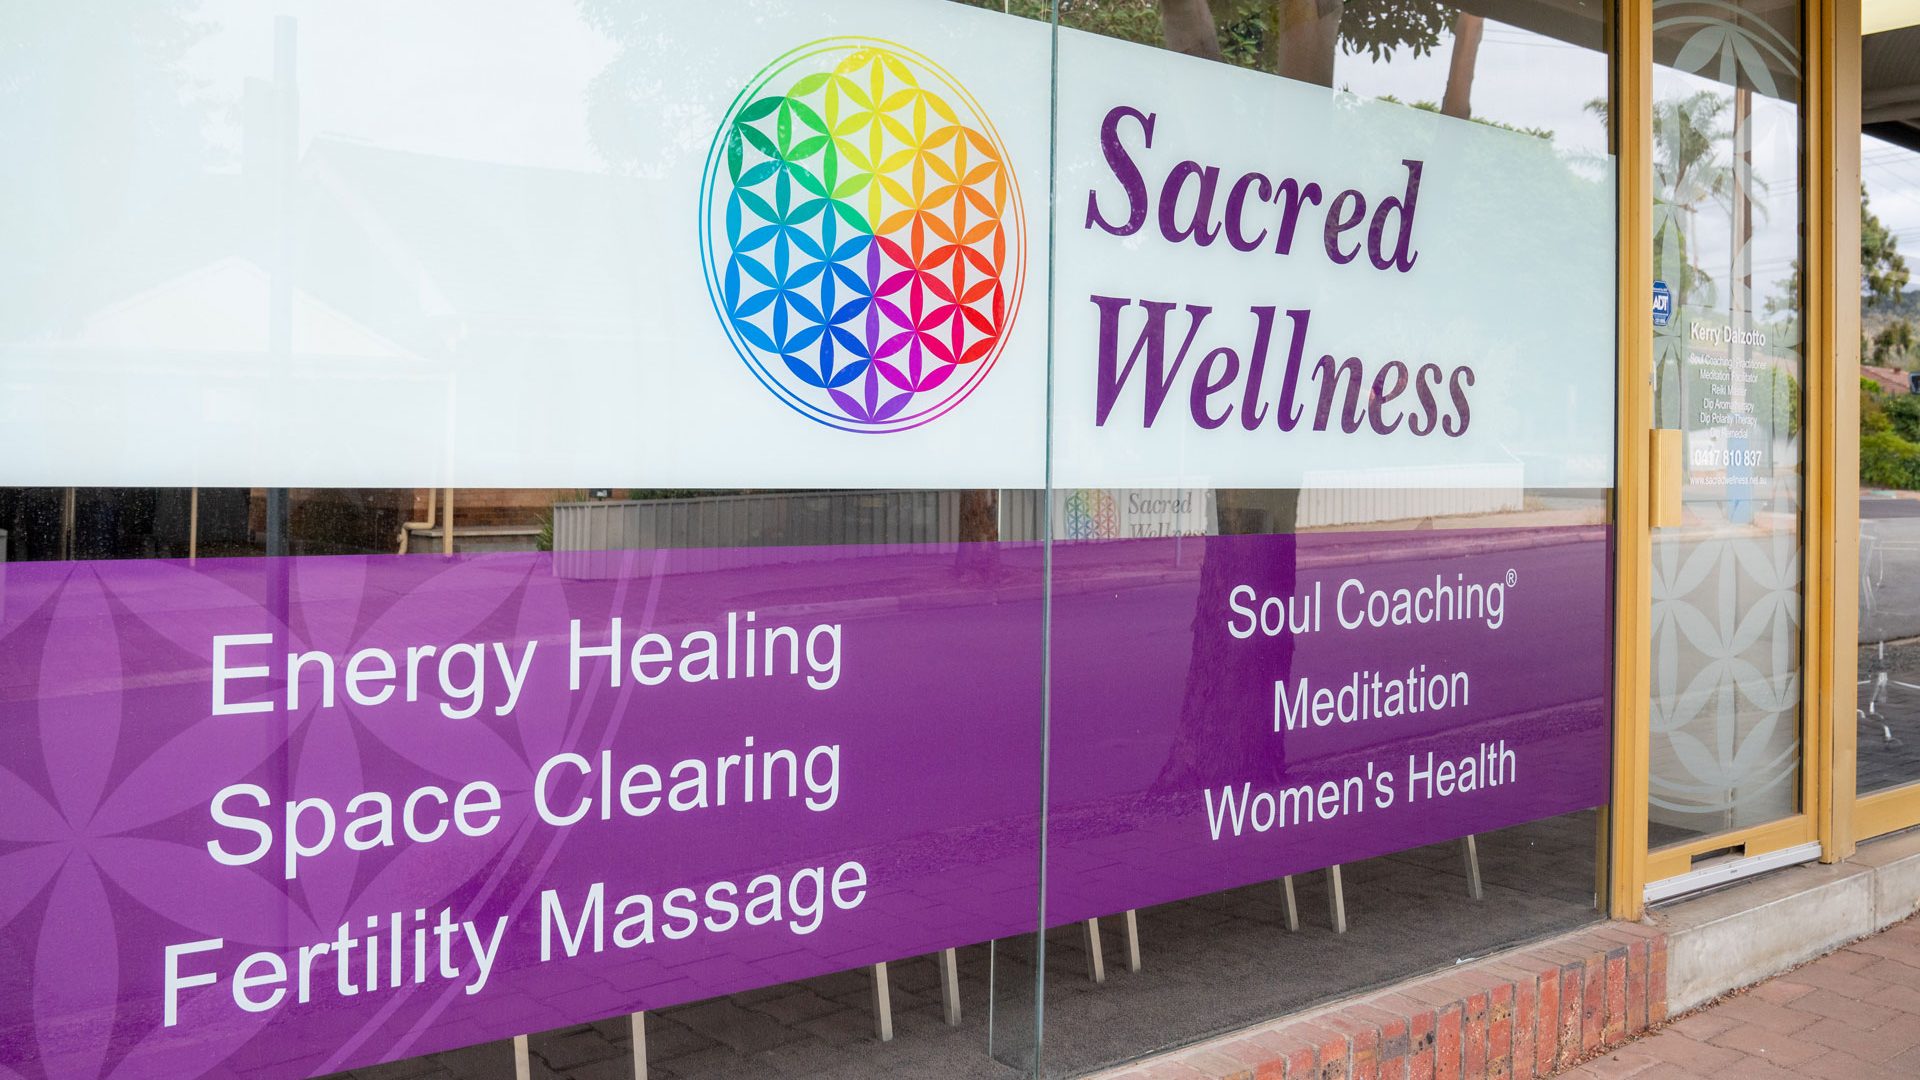 Sacred Wellness